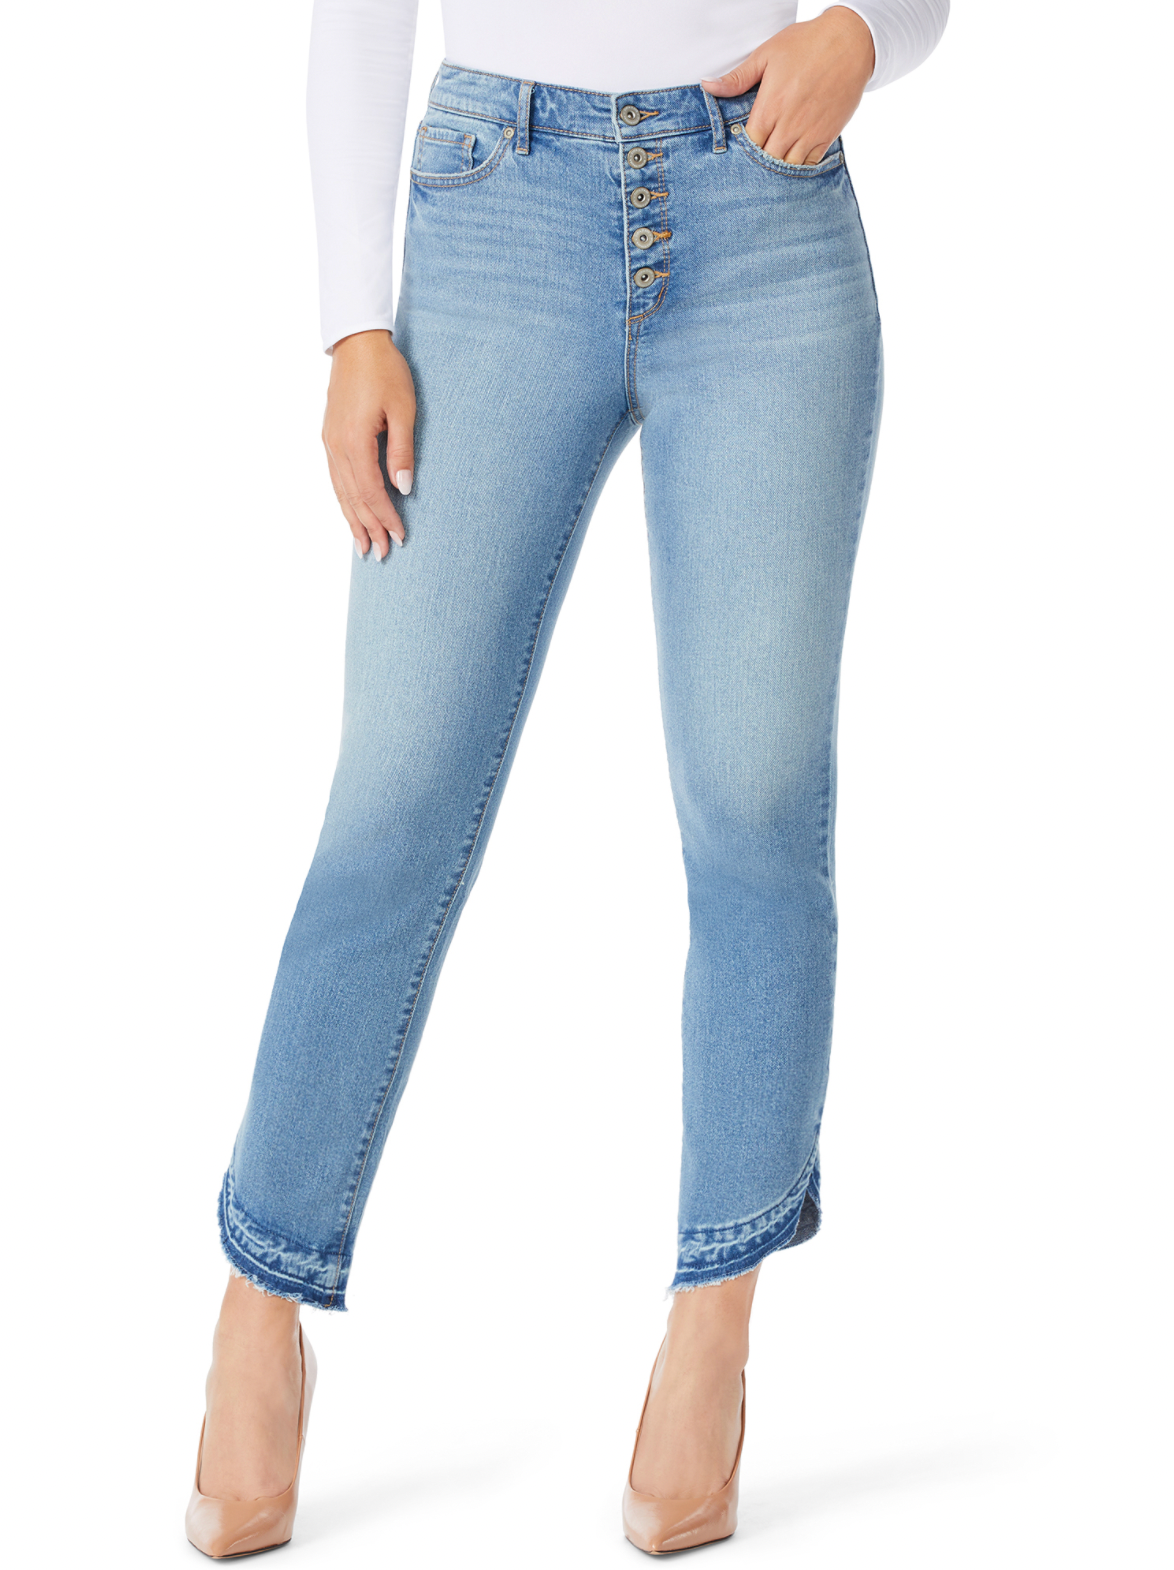 Sofia Vergara Jeans Women 16 Plus Blue Denim Skinny Ankle High